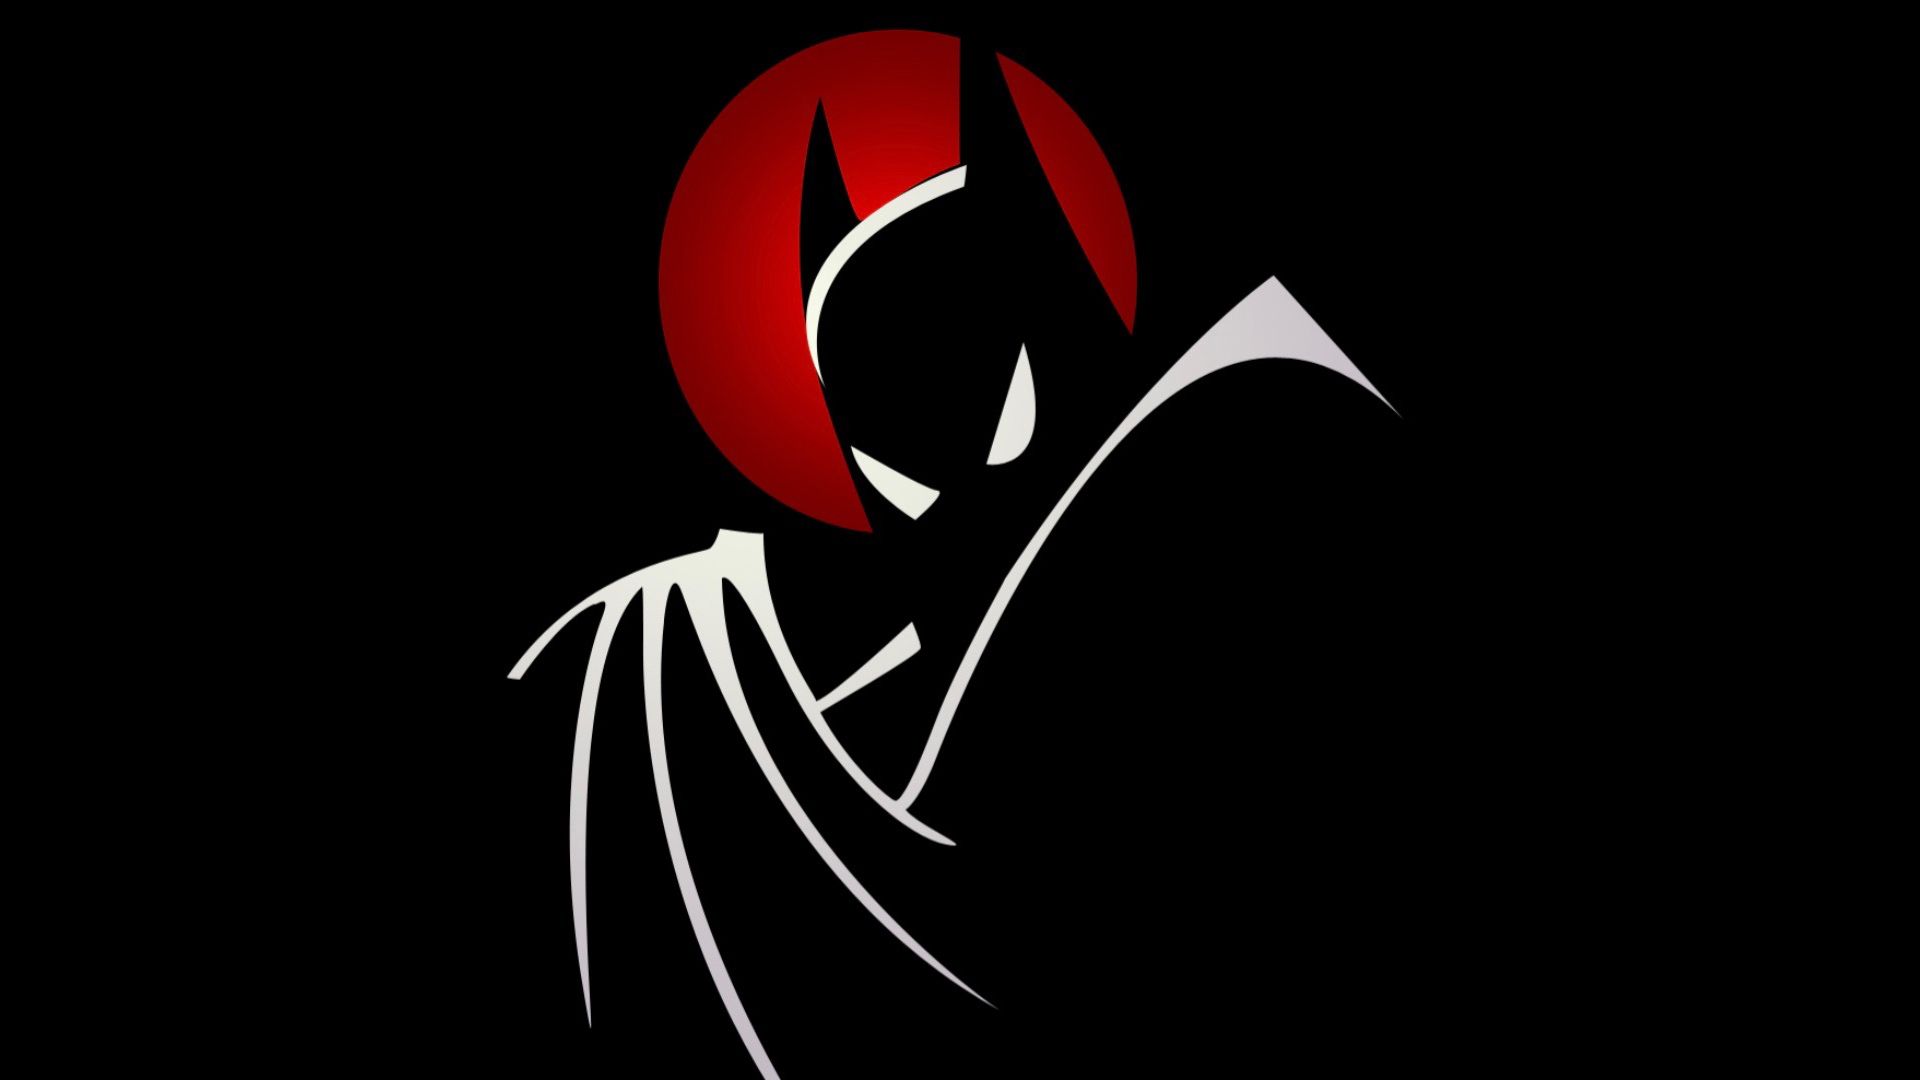 Batman Animated Series Wallpaper, HD Anime 4K Wallpapers, Image, Photos and...